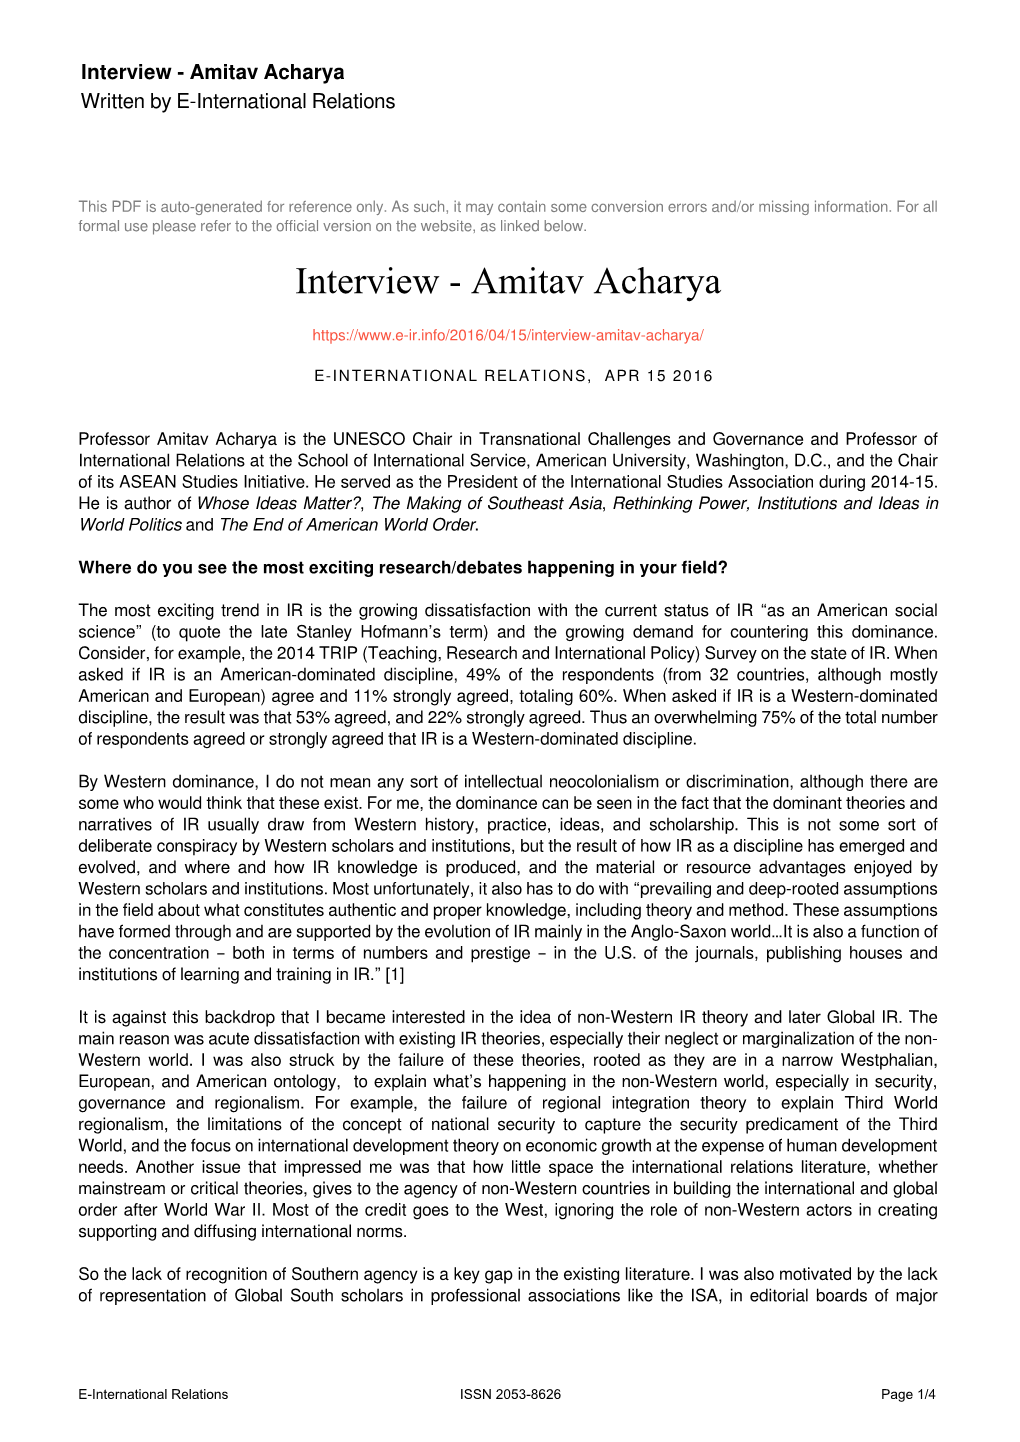 Amitav Acharya Written by E-International Relations